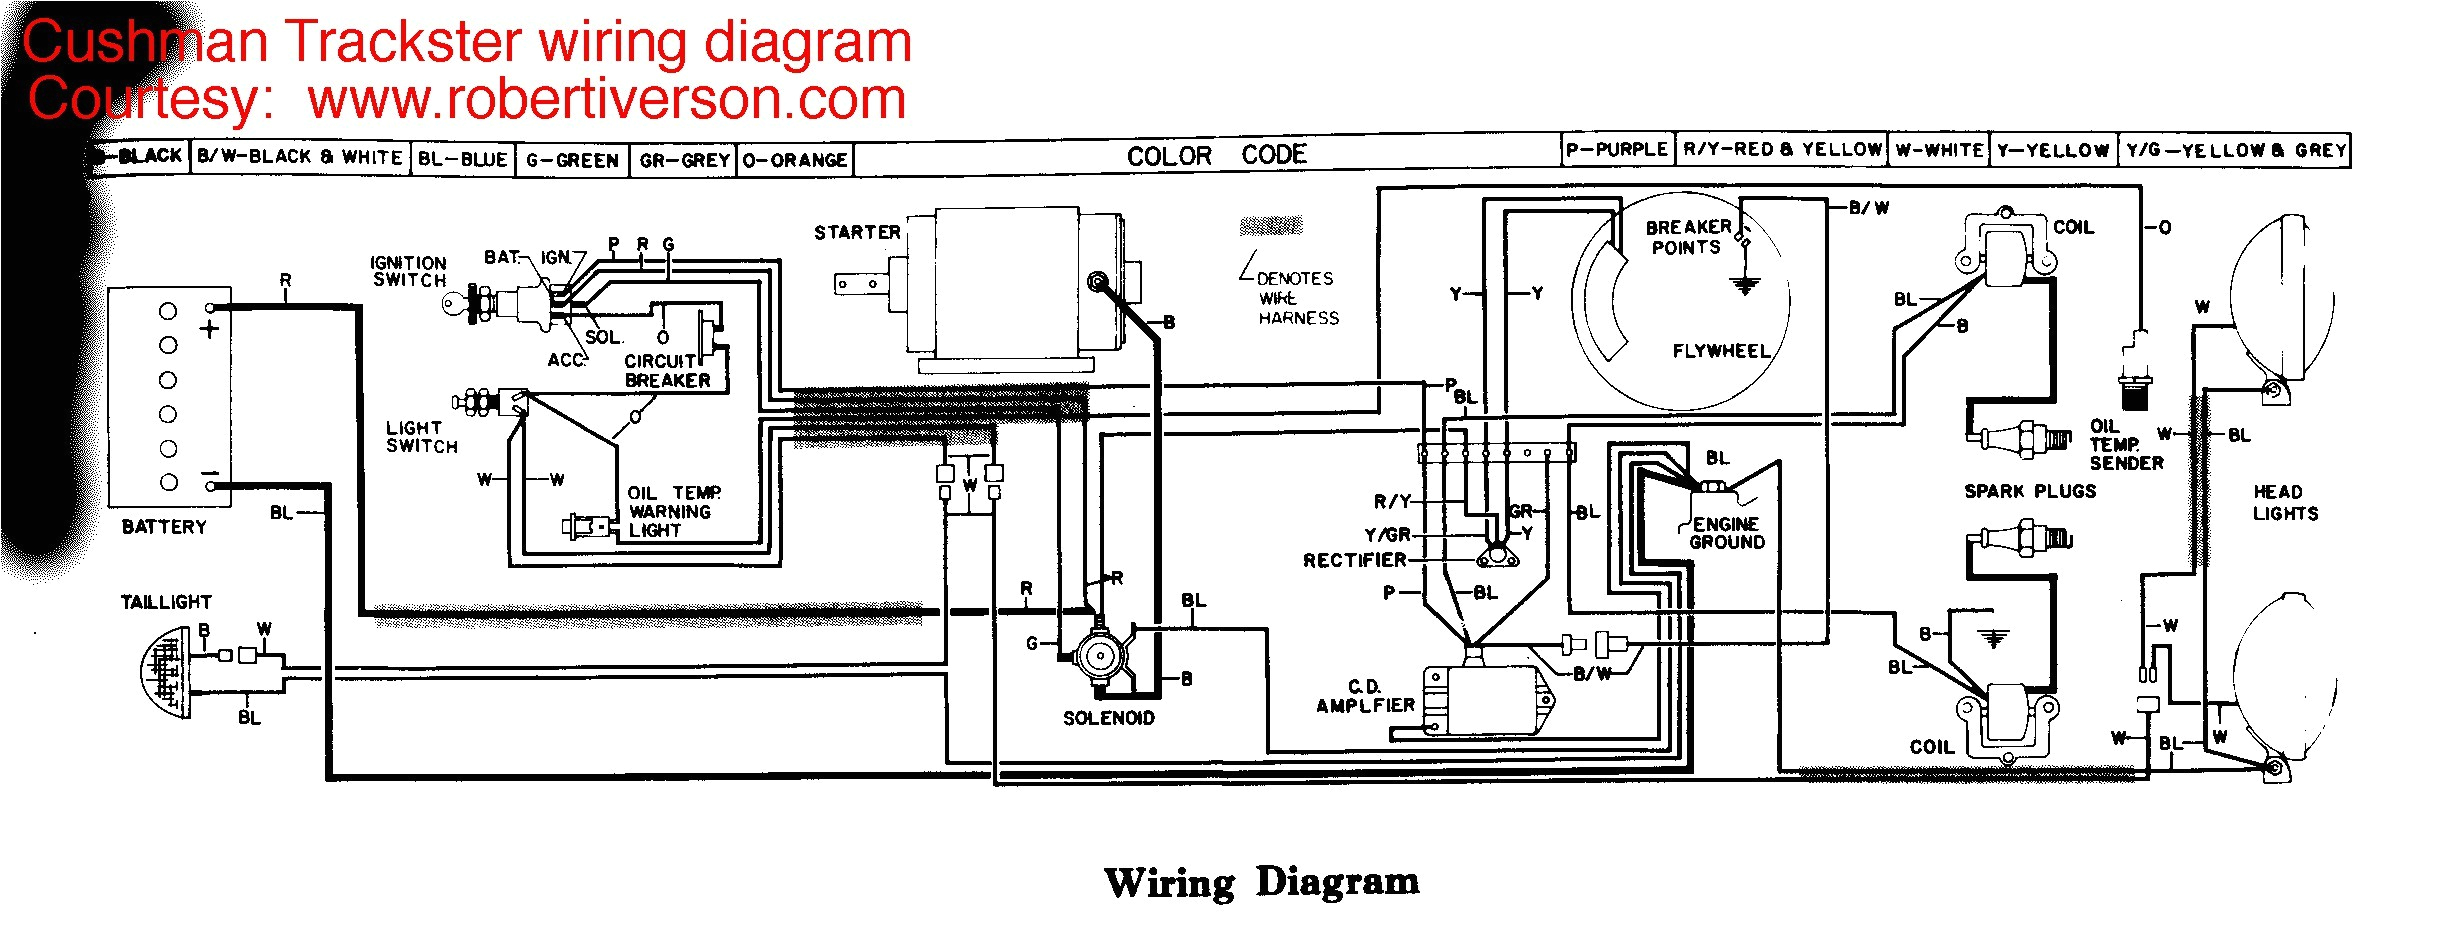 cushman truckster wiring diagram wiring diagram completed cushman truckster 36 volt wiring diagram wiring diagram today